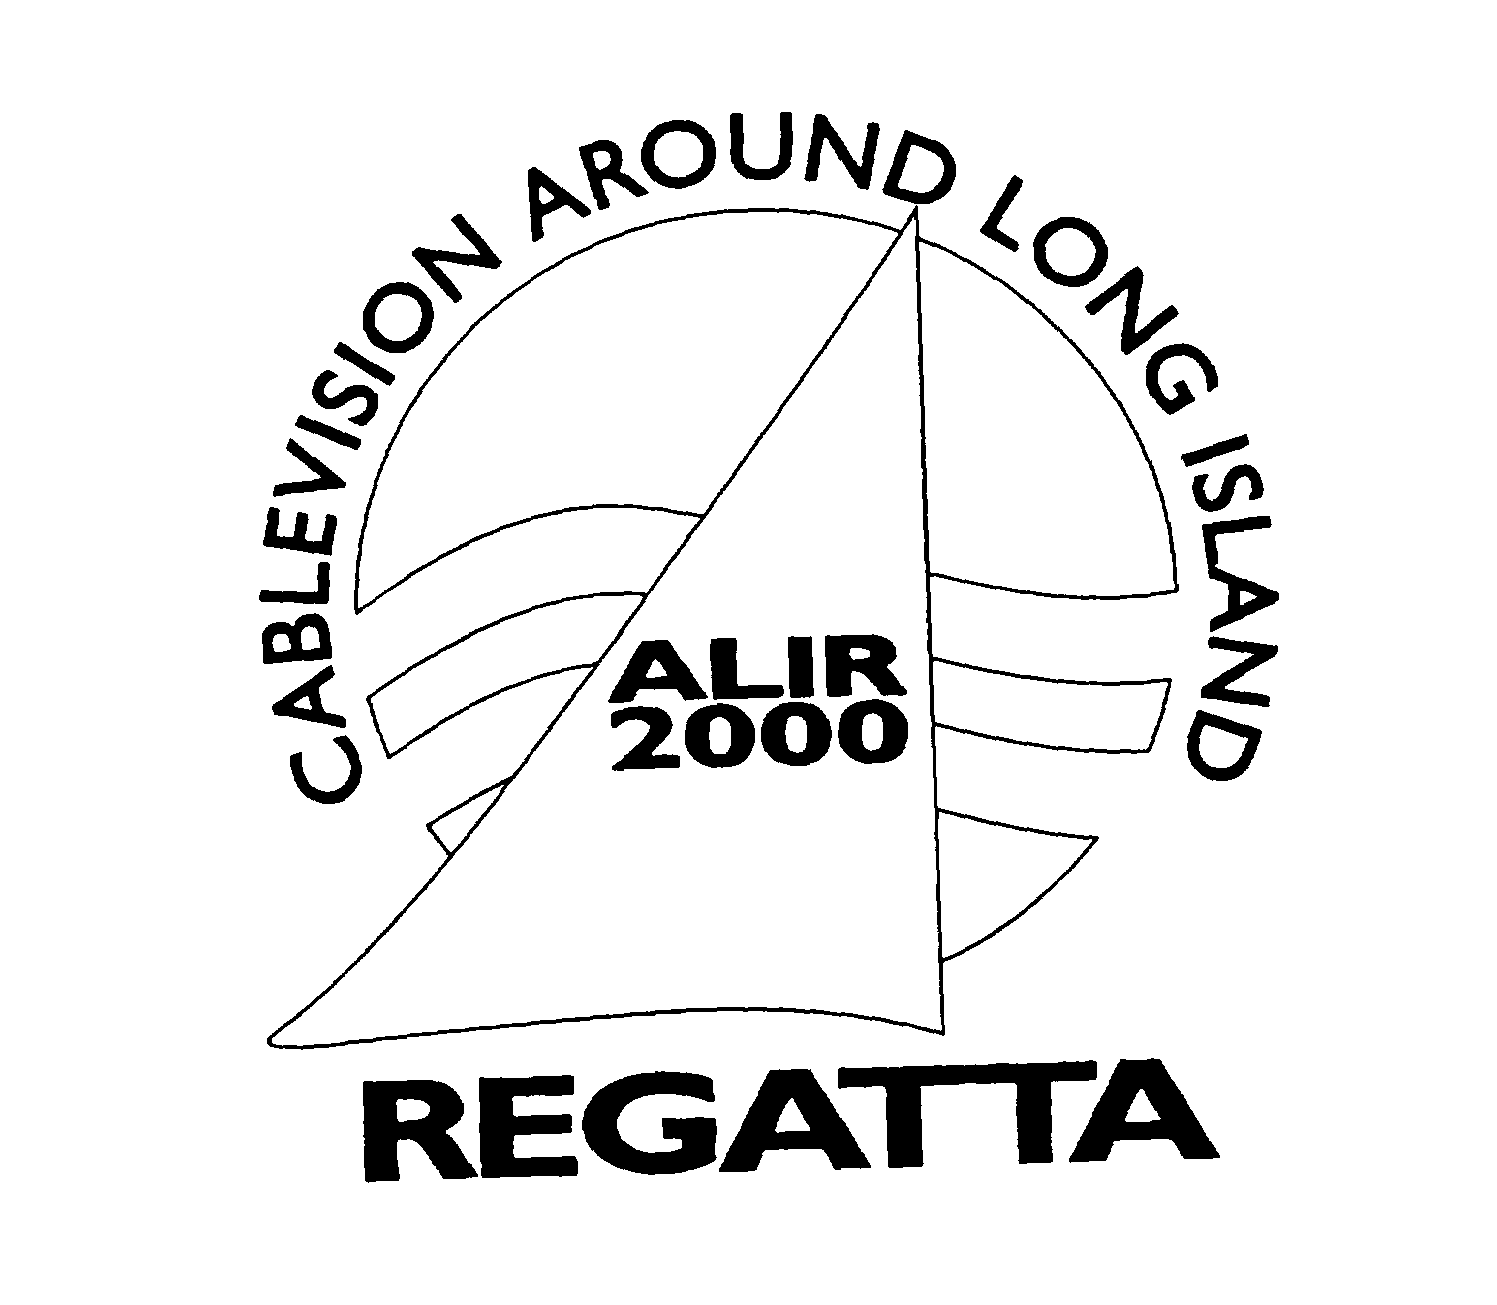  ALIR 2000 CABLEVISION AROUND LONG ISLAND REGATTA